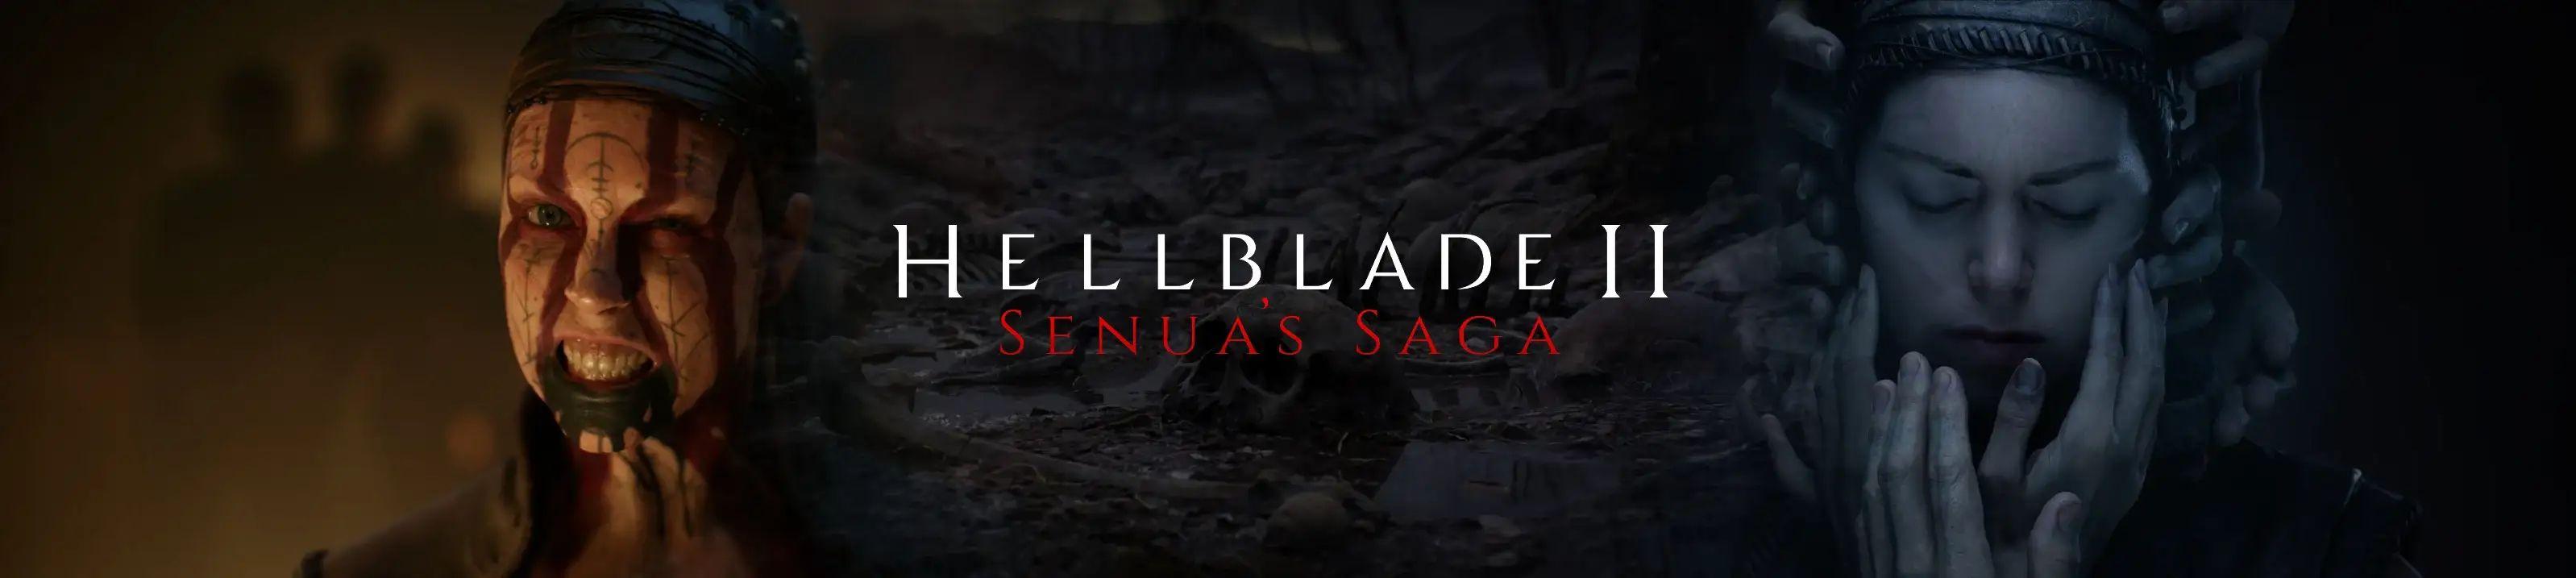 Senua's Saga: Hellblade II mobile